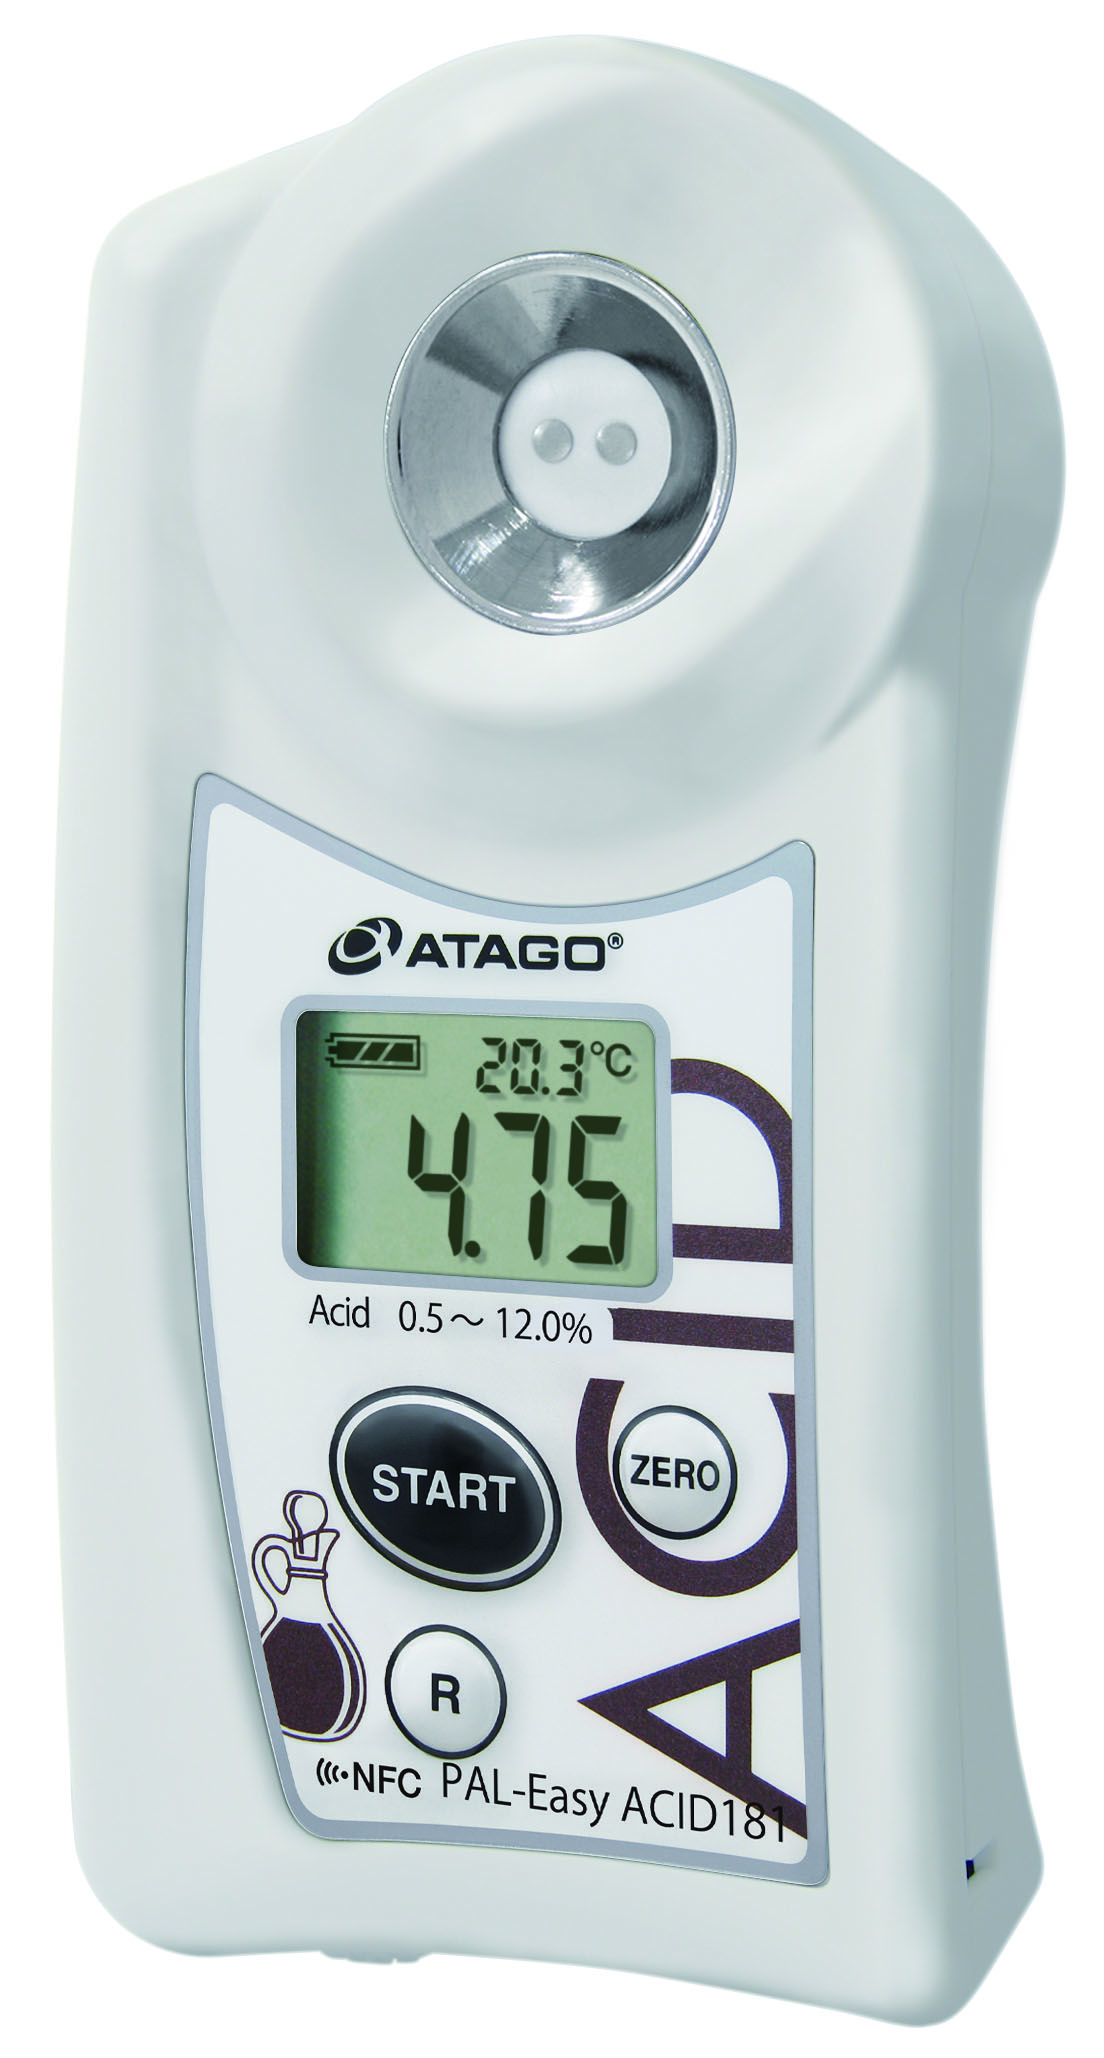 Atago 7781 Pocket Acidity Meter PAL-Easy ACID181 Master Kit for Vinegar, Acid : 0.50 to 12.0％ Measurement Range